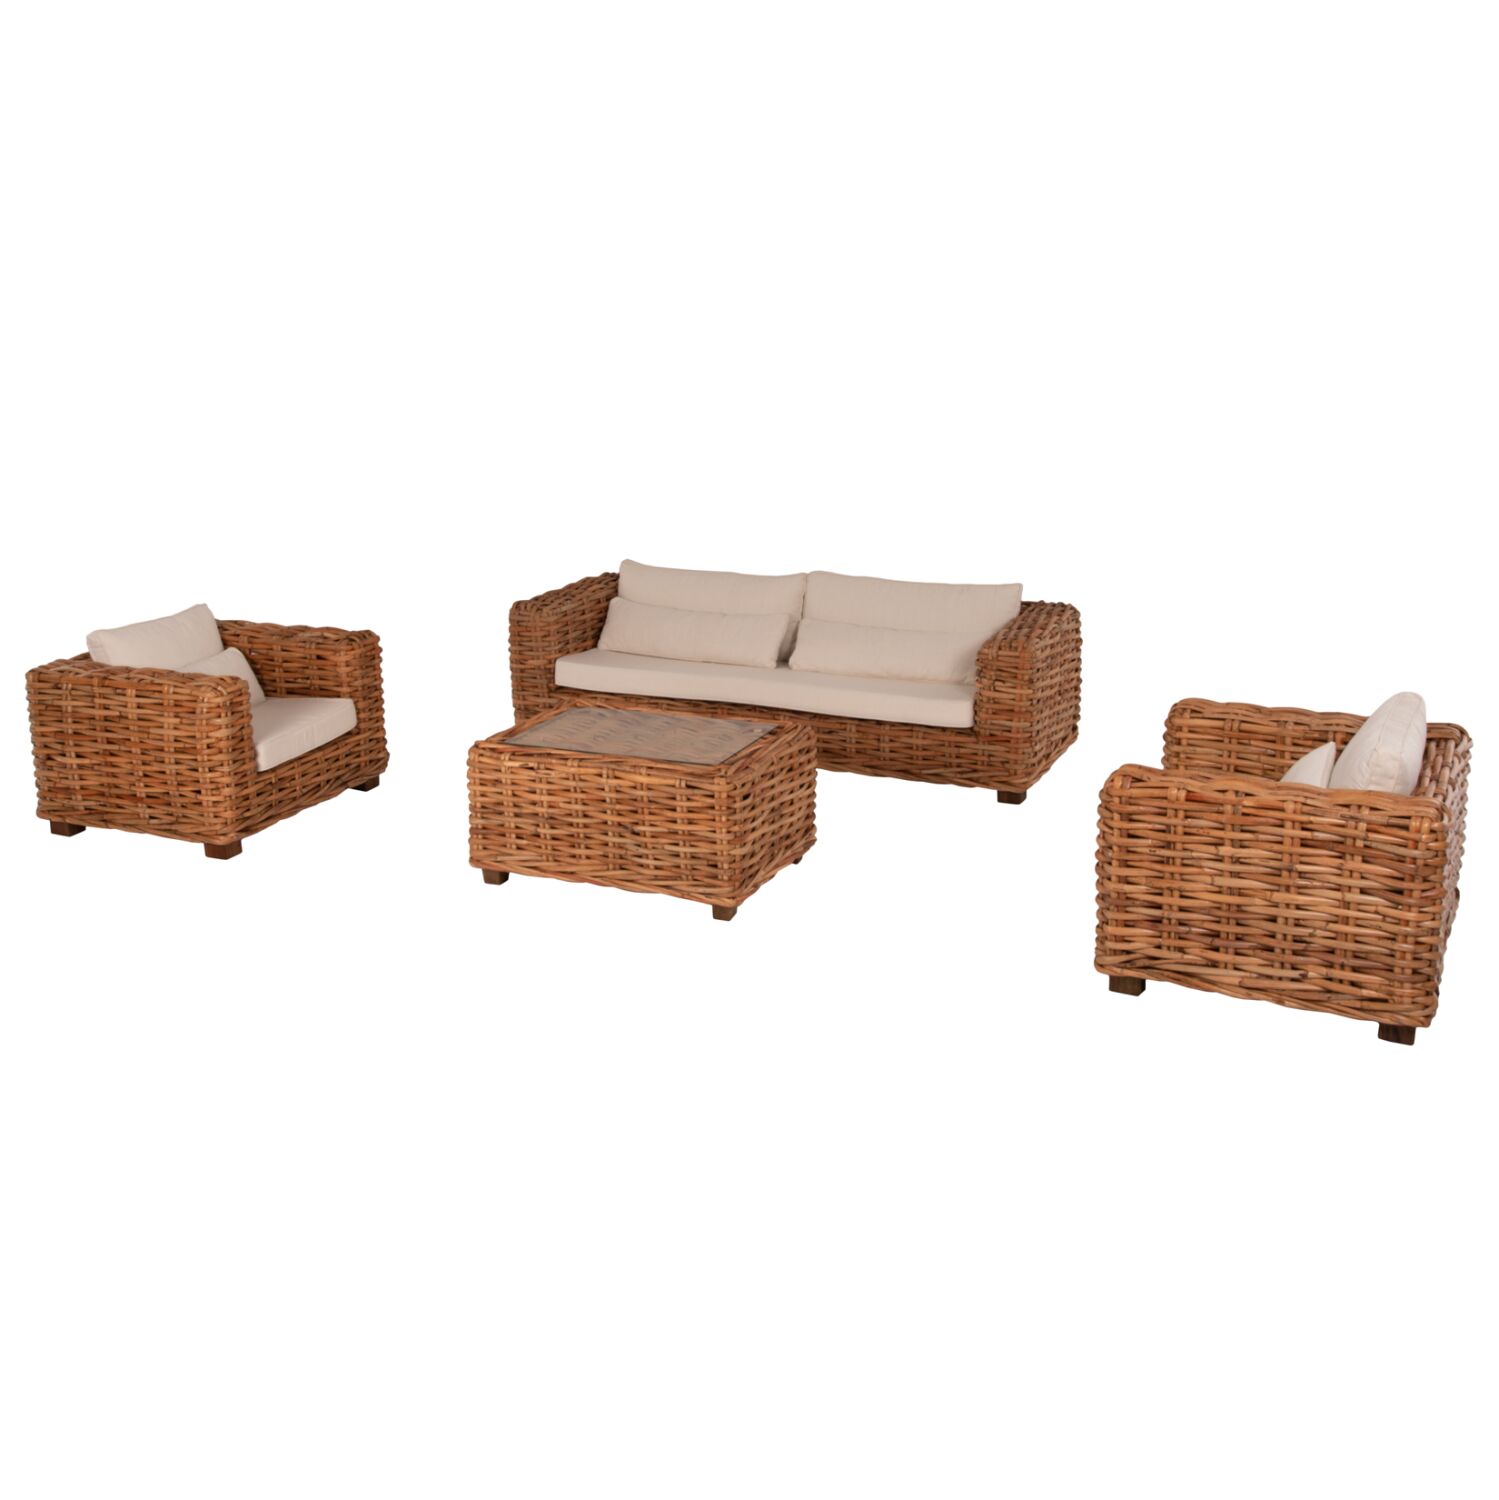 set saloni exchoroy fb99656 4tmch fysiko Outdoor Lounge Set 4pcs Tropel Hm9656 Natural Rattan-mahogany Wood-white Cushions